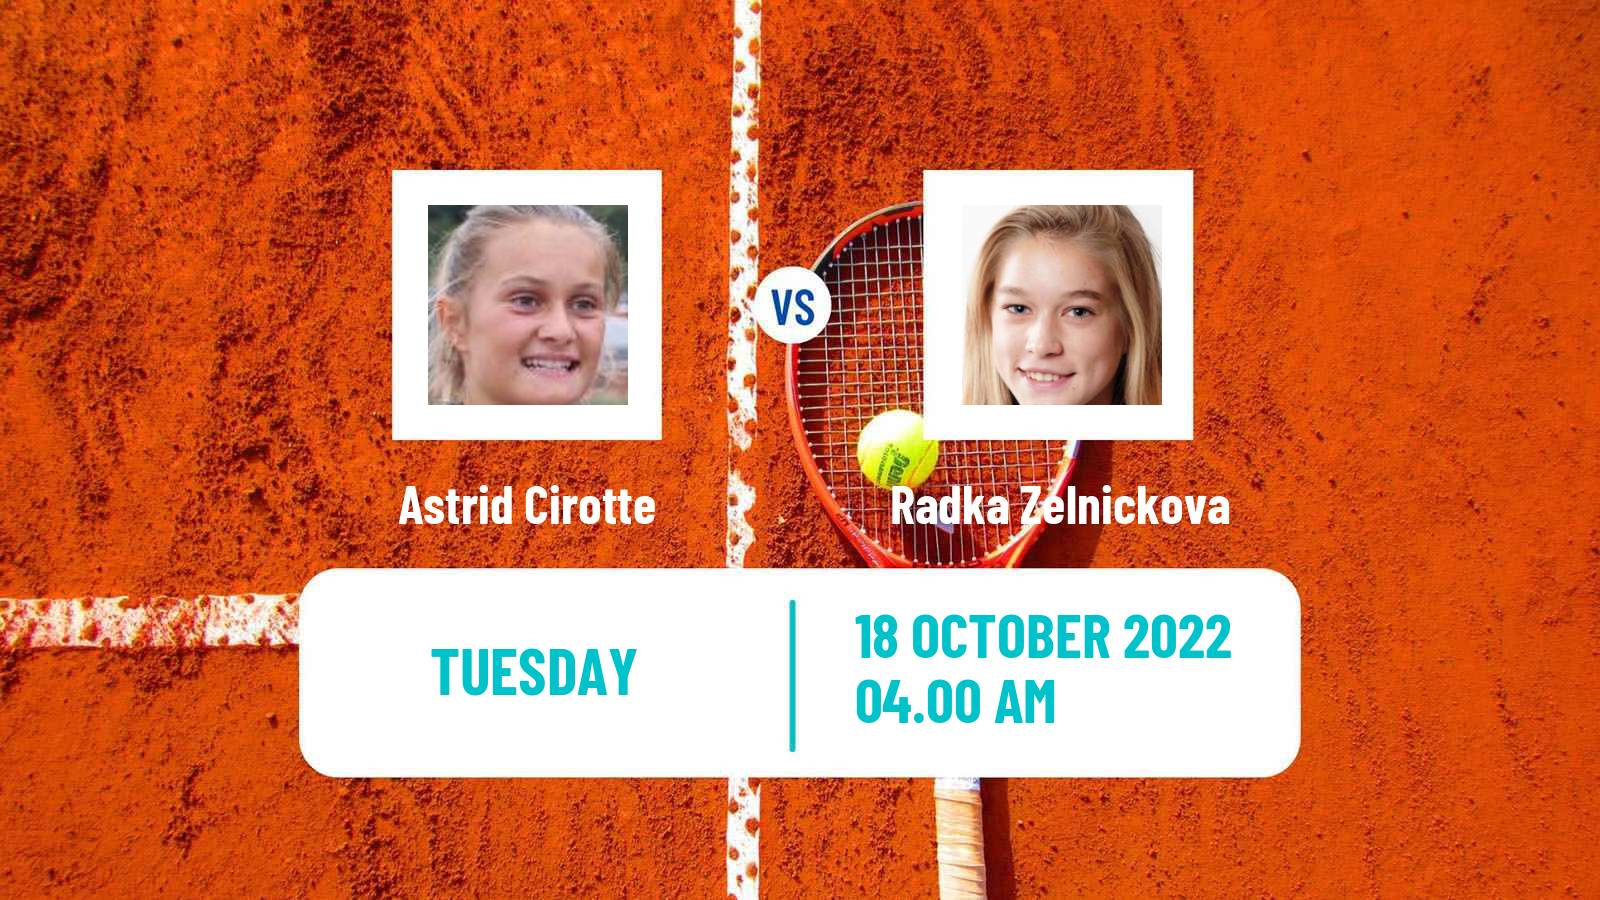 Tennis ITF Tournaments Astrid Cirotte - Radka Zelnickova